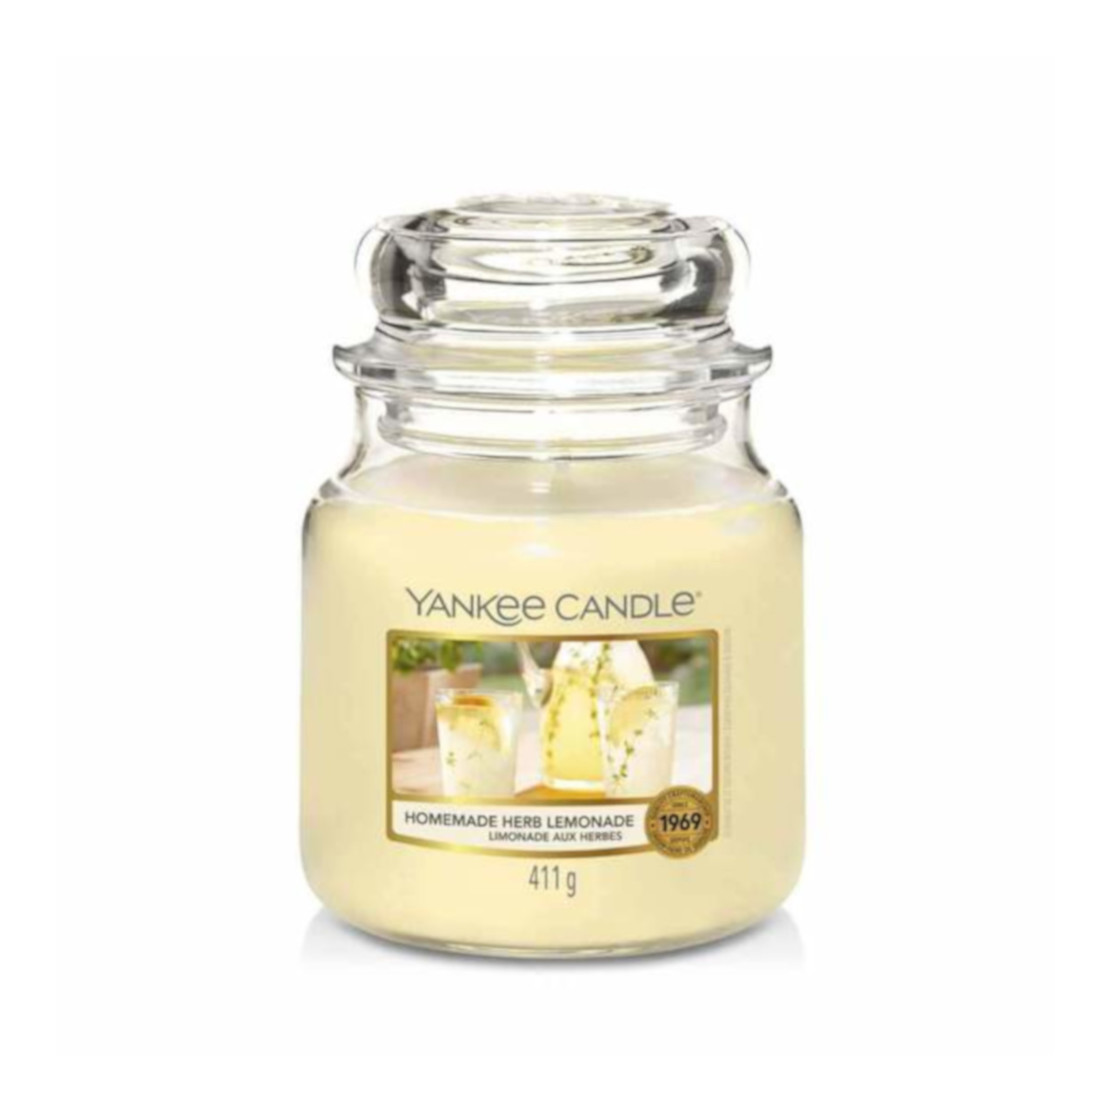 Yankee Candle Homemade Herb Lemonade Medium Jar